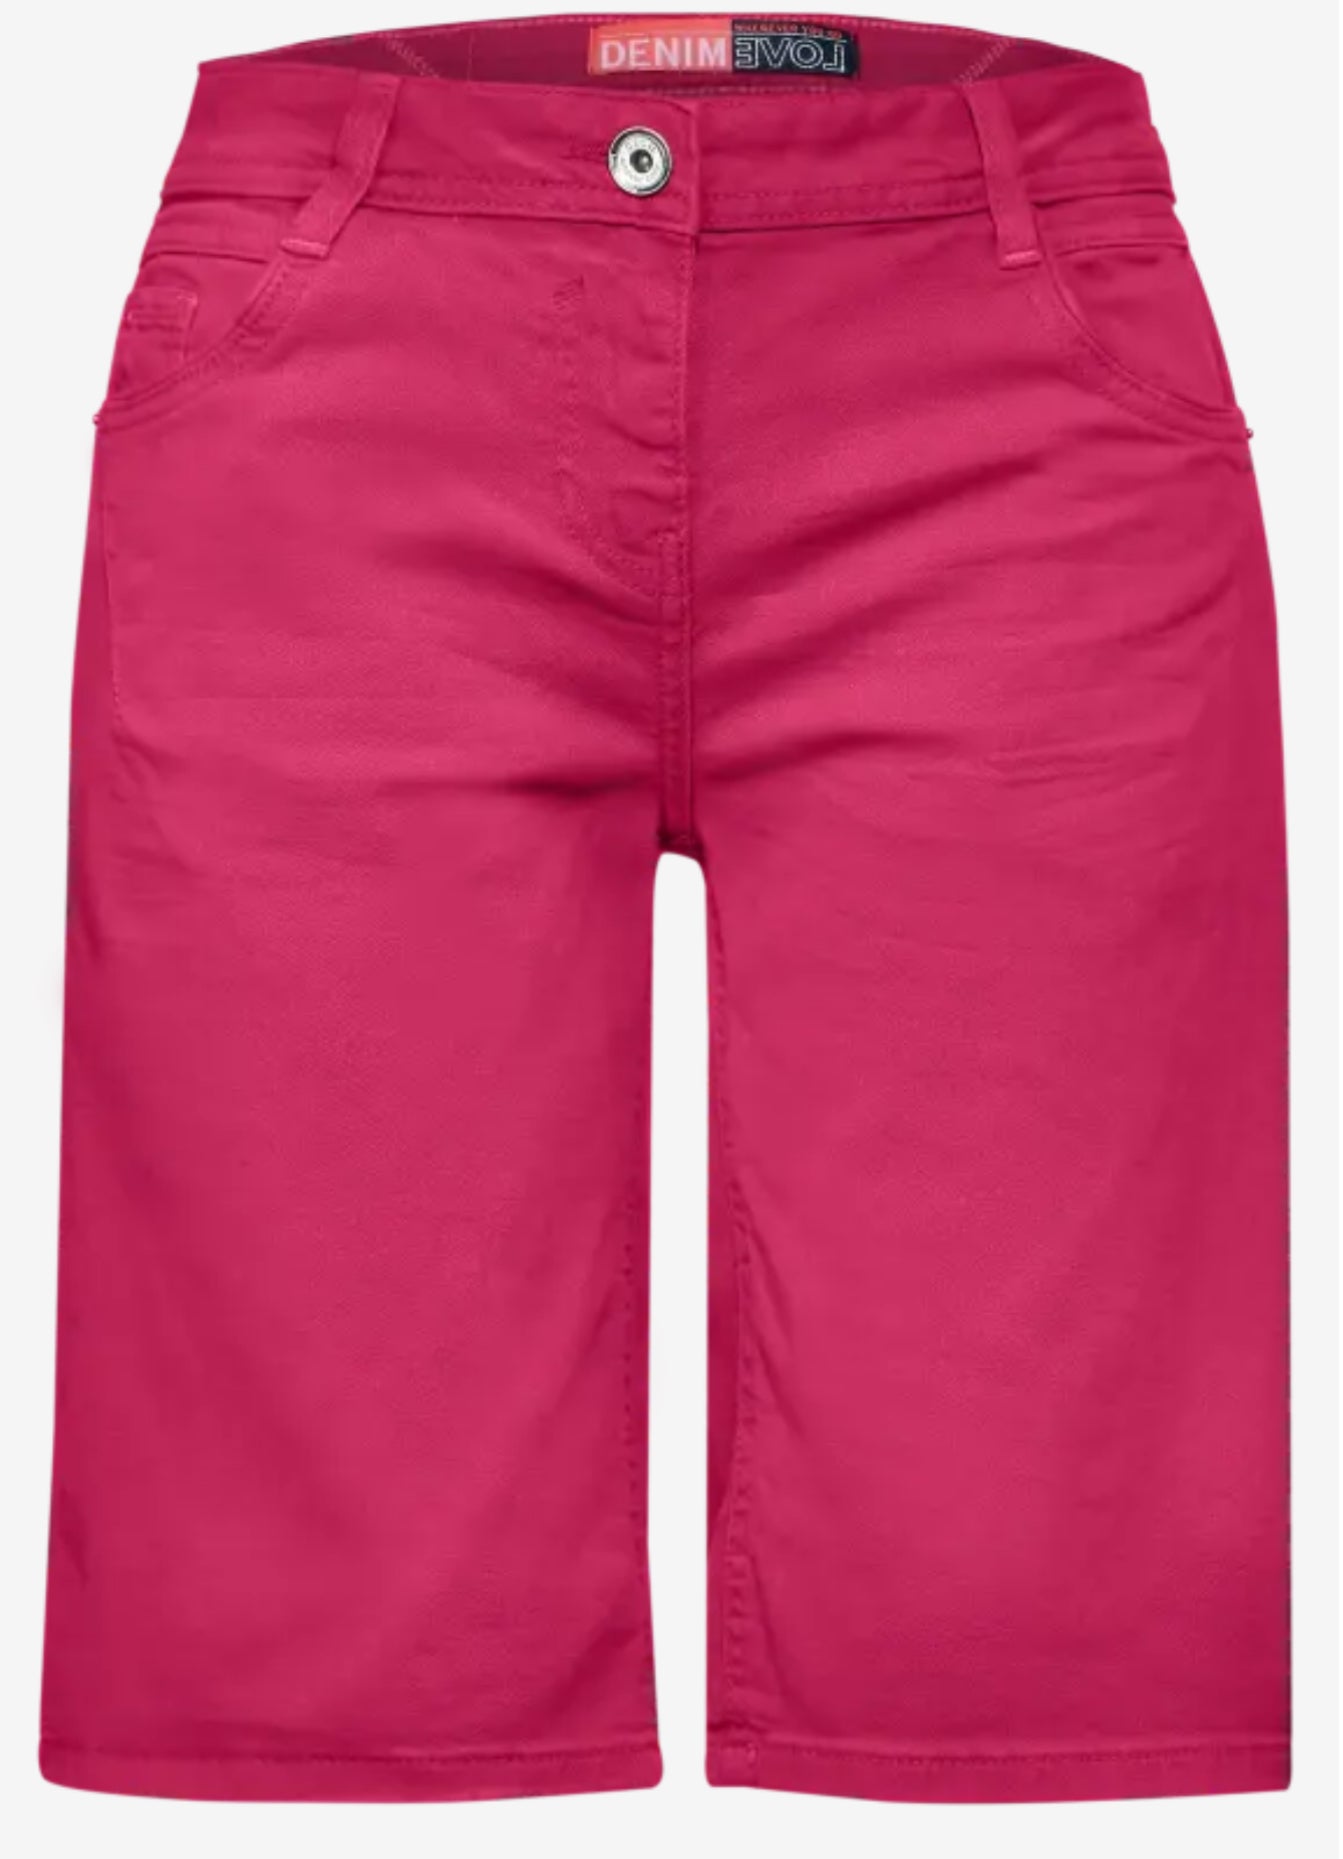 Jeans Shorts STYLE SCARLETT - pink sorbet